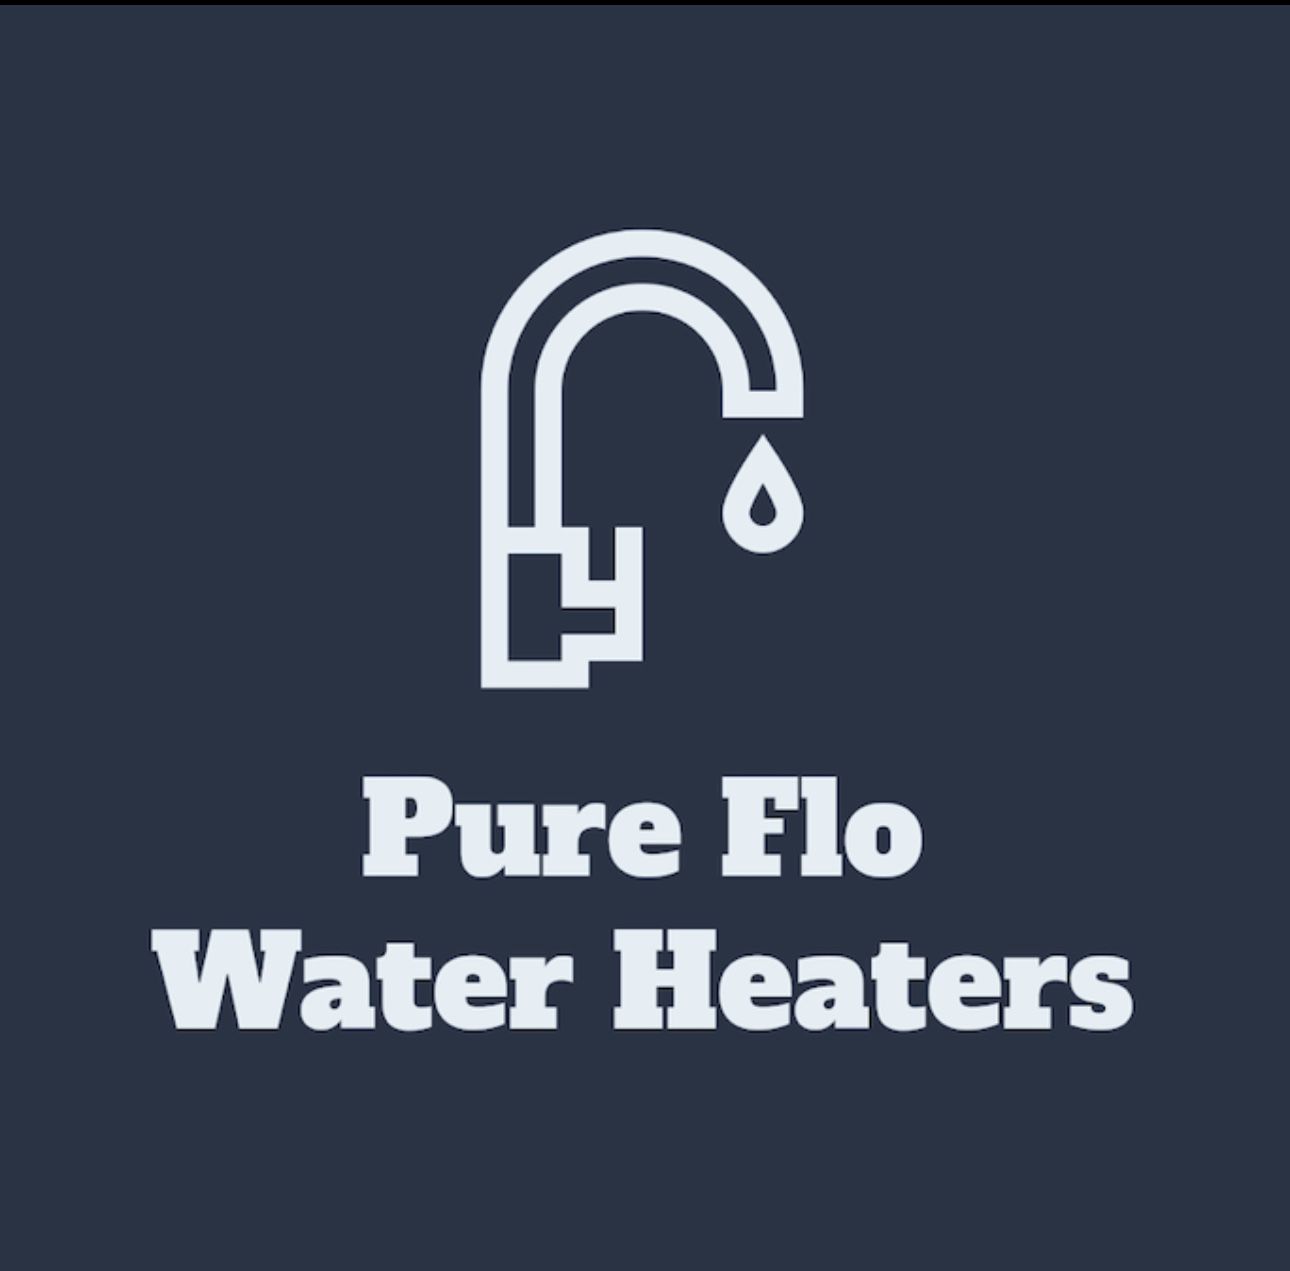 Water Heaters 